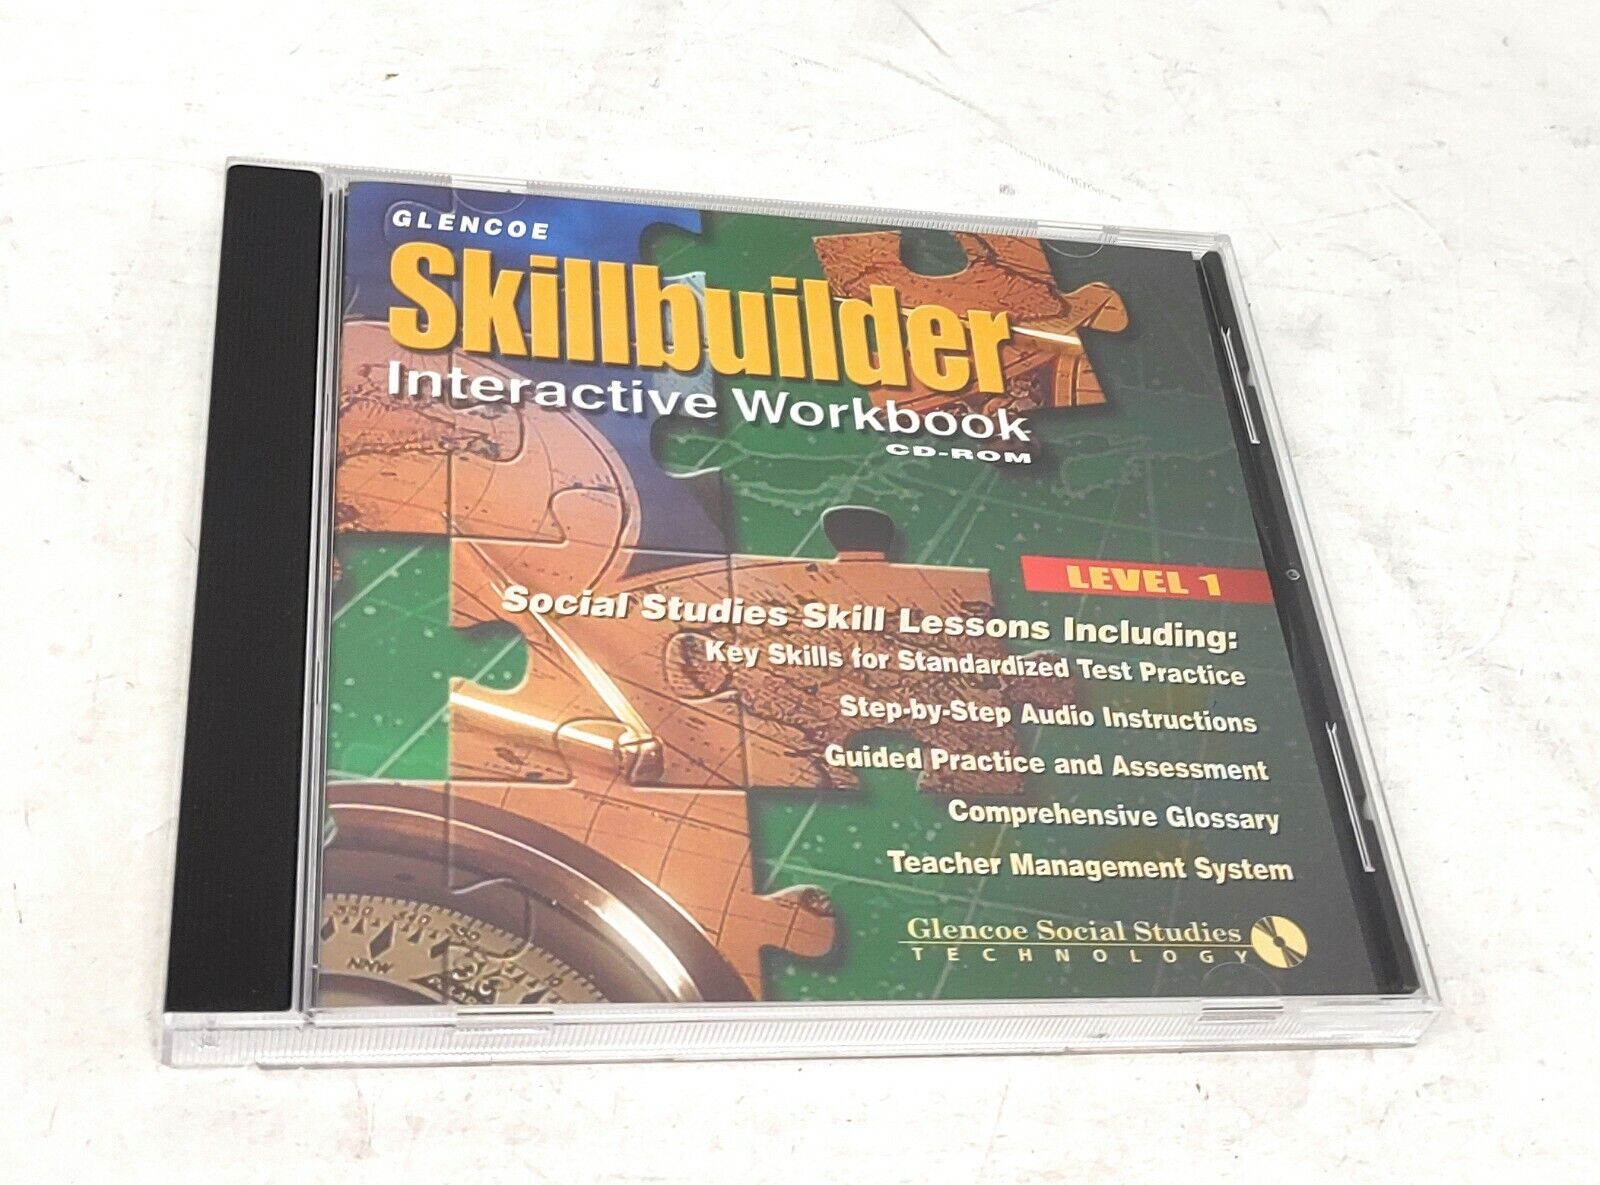 Glencoe SkillBuilder Interactive WorkBook Level 1 CD Rom